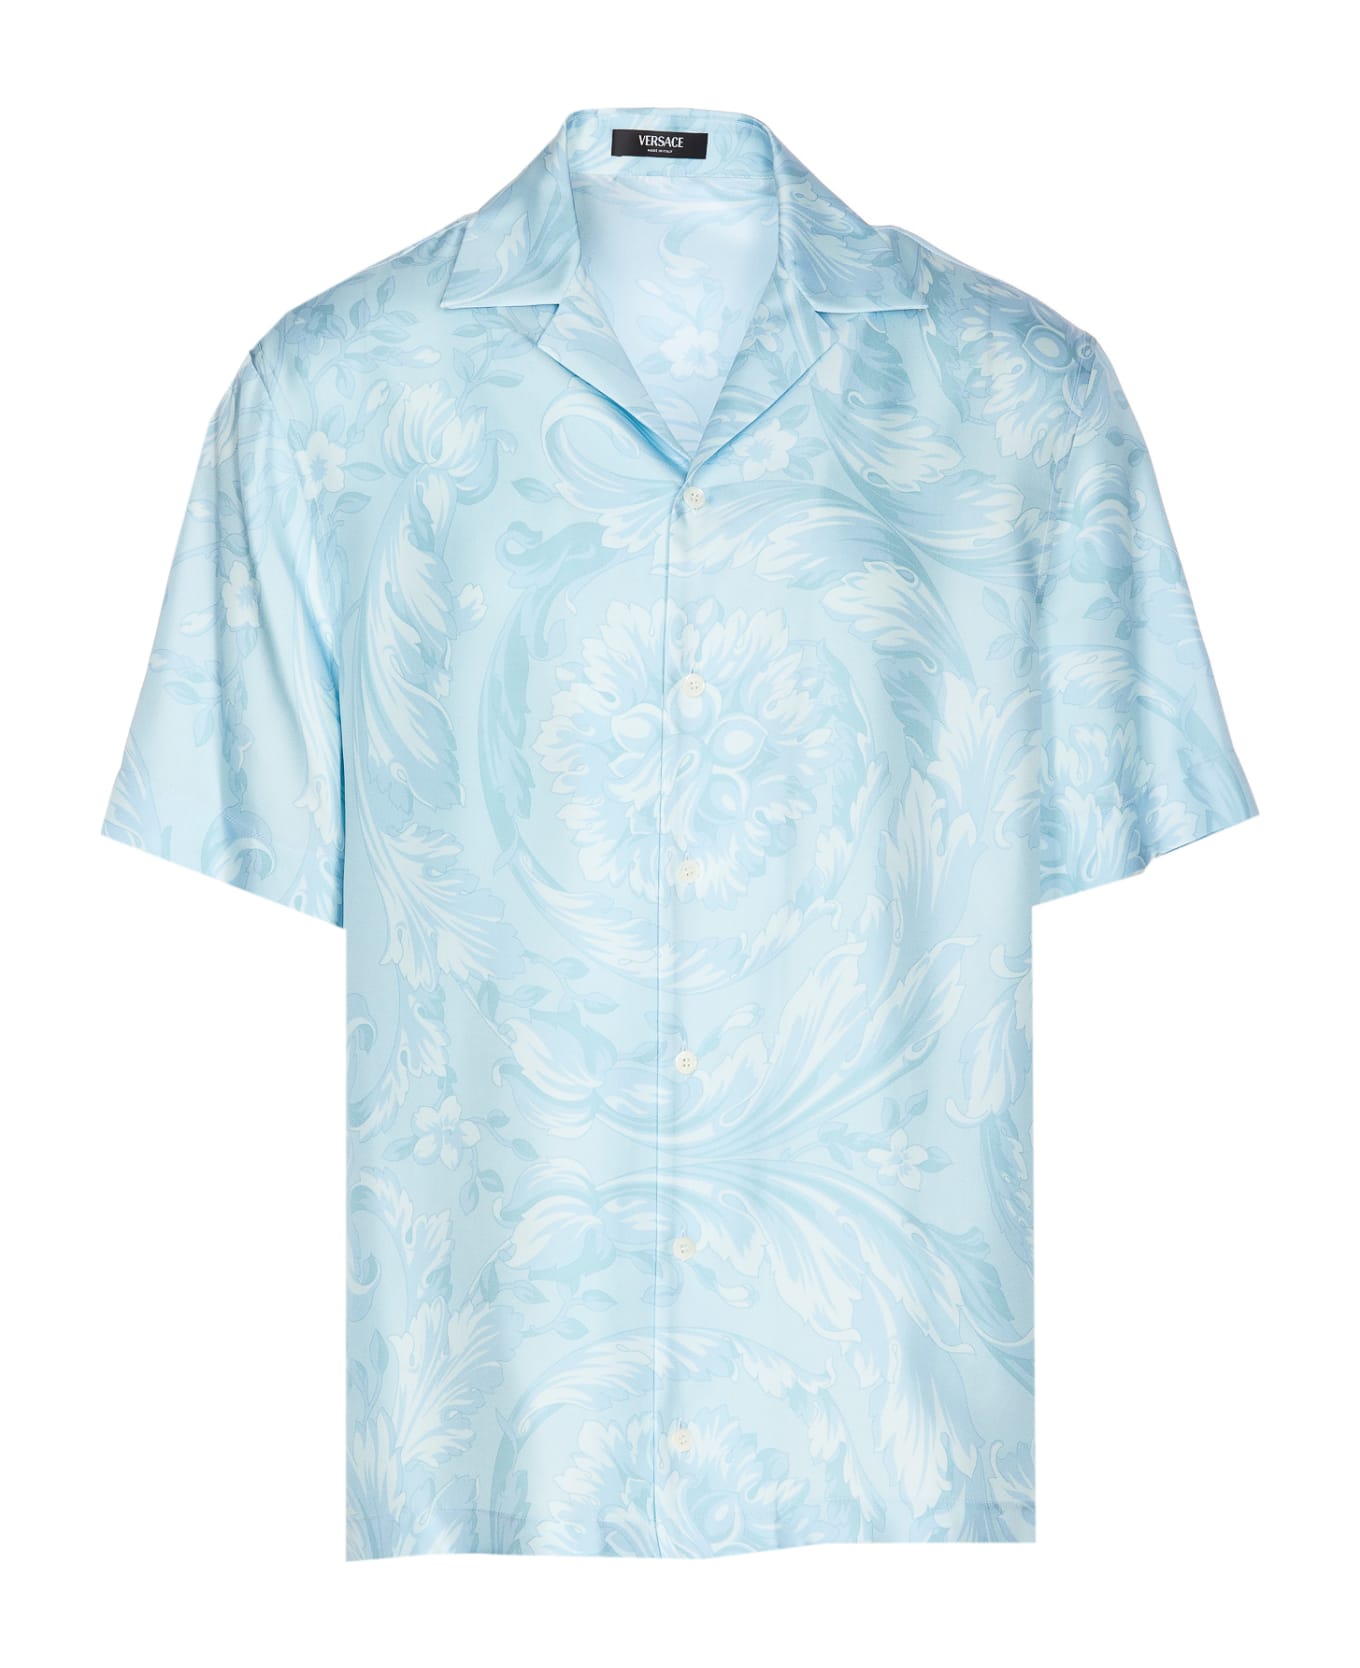 Versace Barocco Shirt - Pale blue シャツ